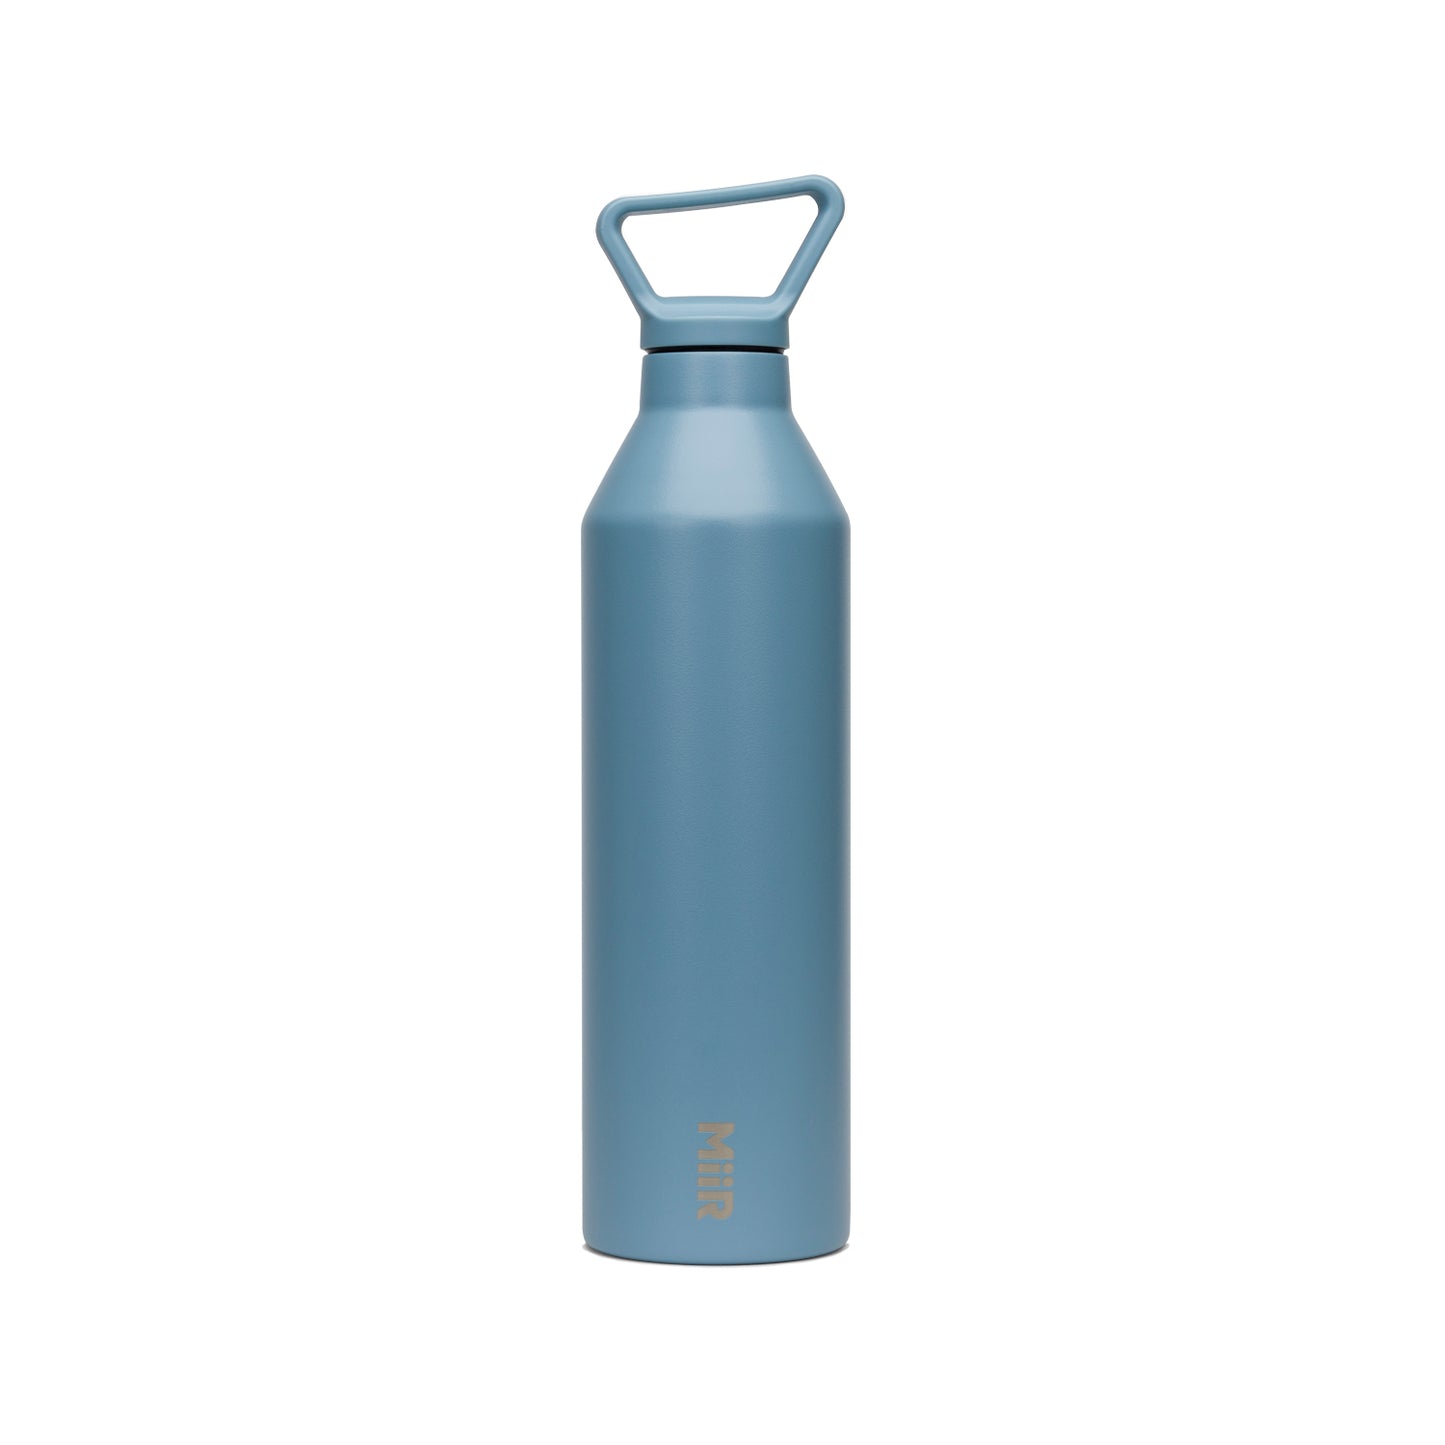 MiiR 23oz Insulated Water Bottle